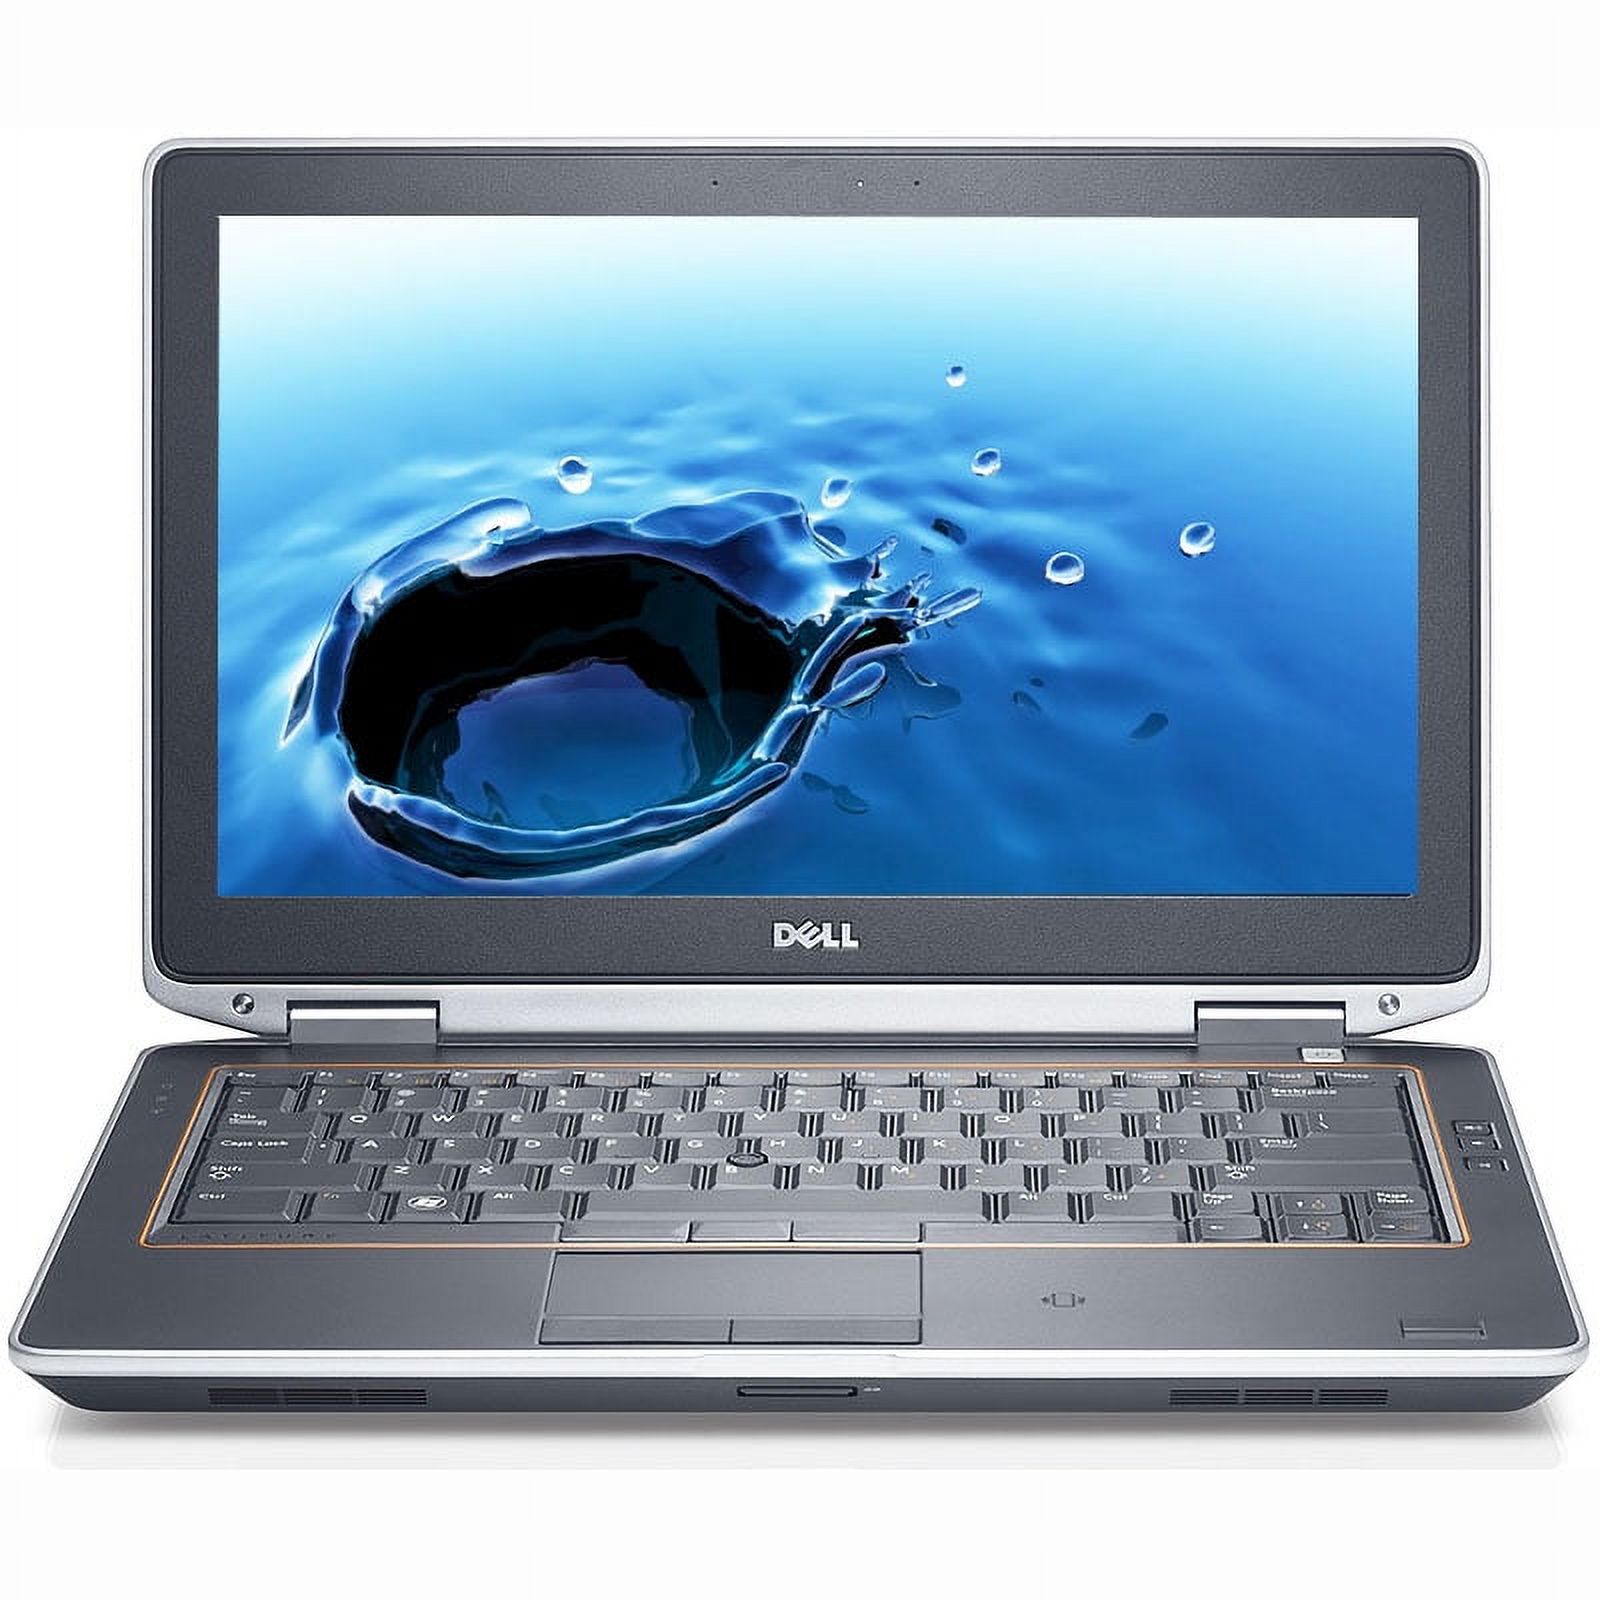 Used Dell Latitude E6320 i5 2.5GHz 4GB 320GB DVD Windows 10 Pro 64 Laptop - image 1 of 4